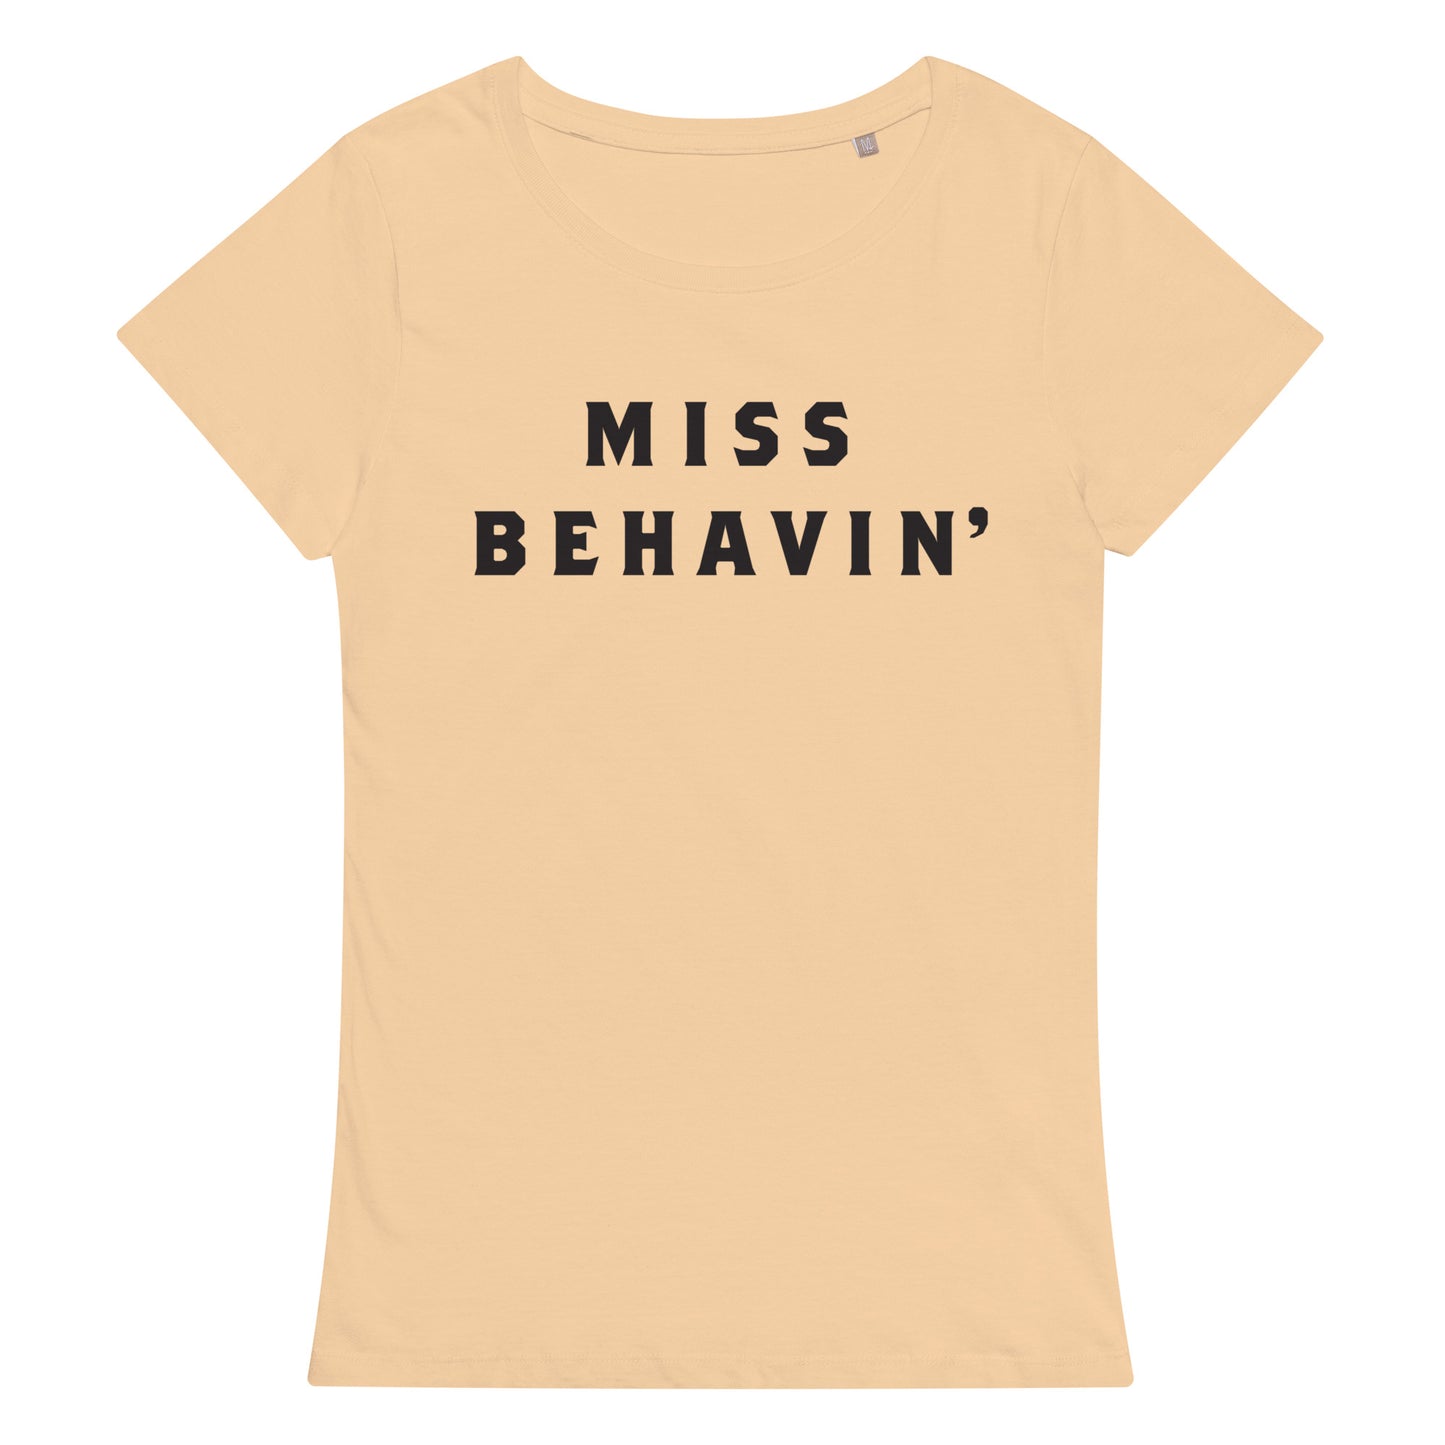 #MissBehavin' - Women’s Organic T-shirt